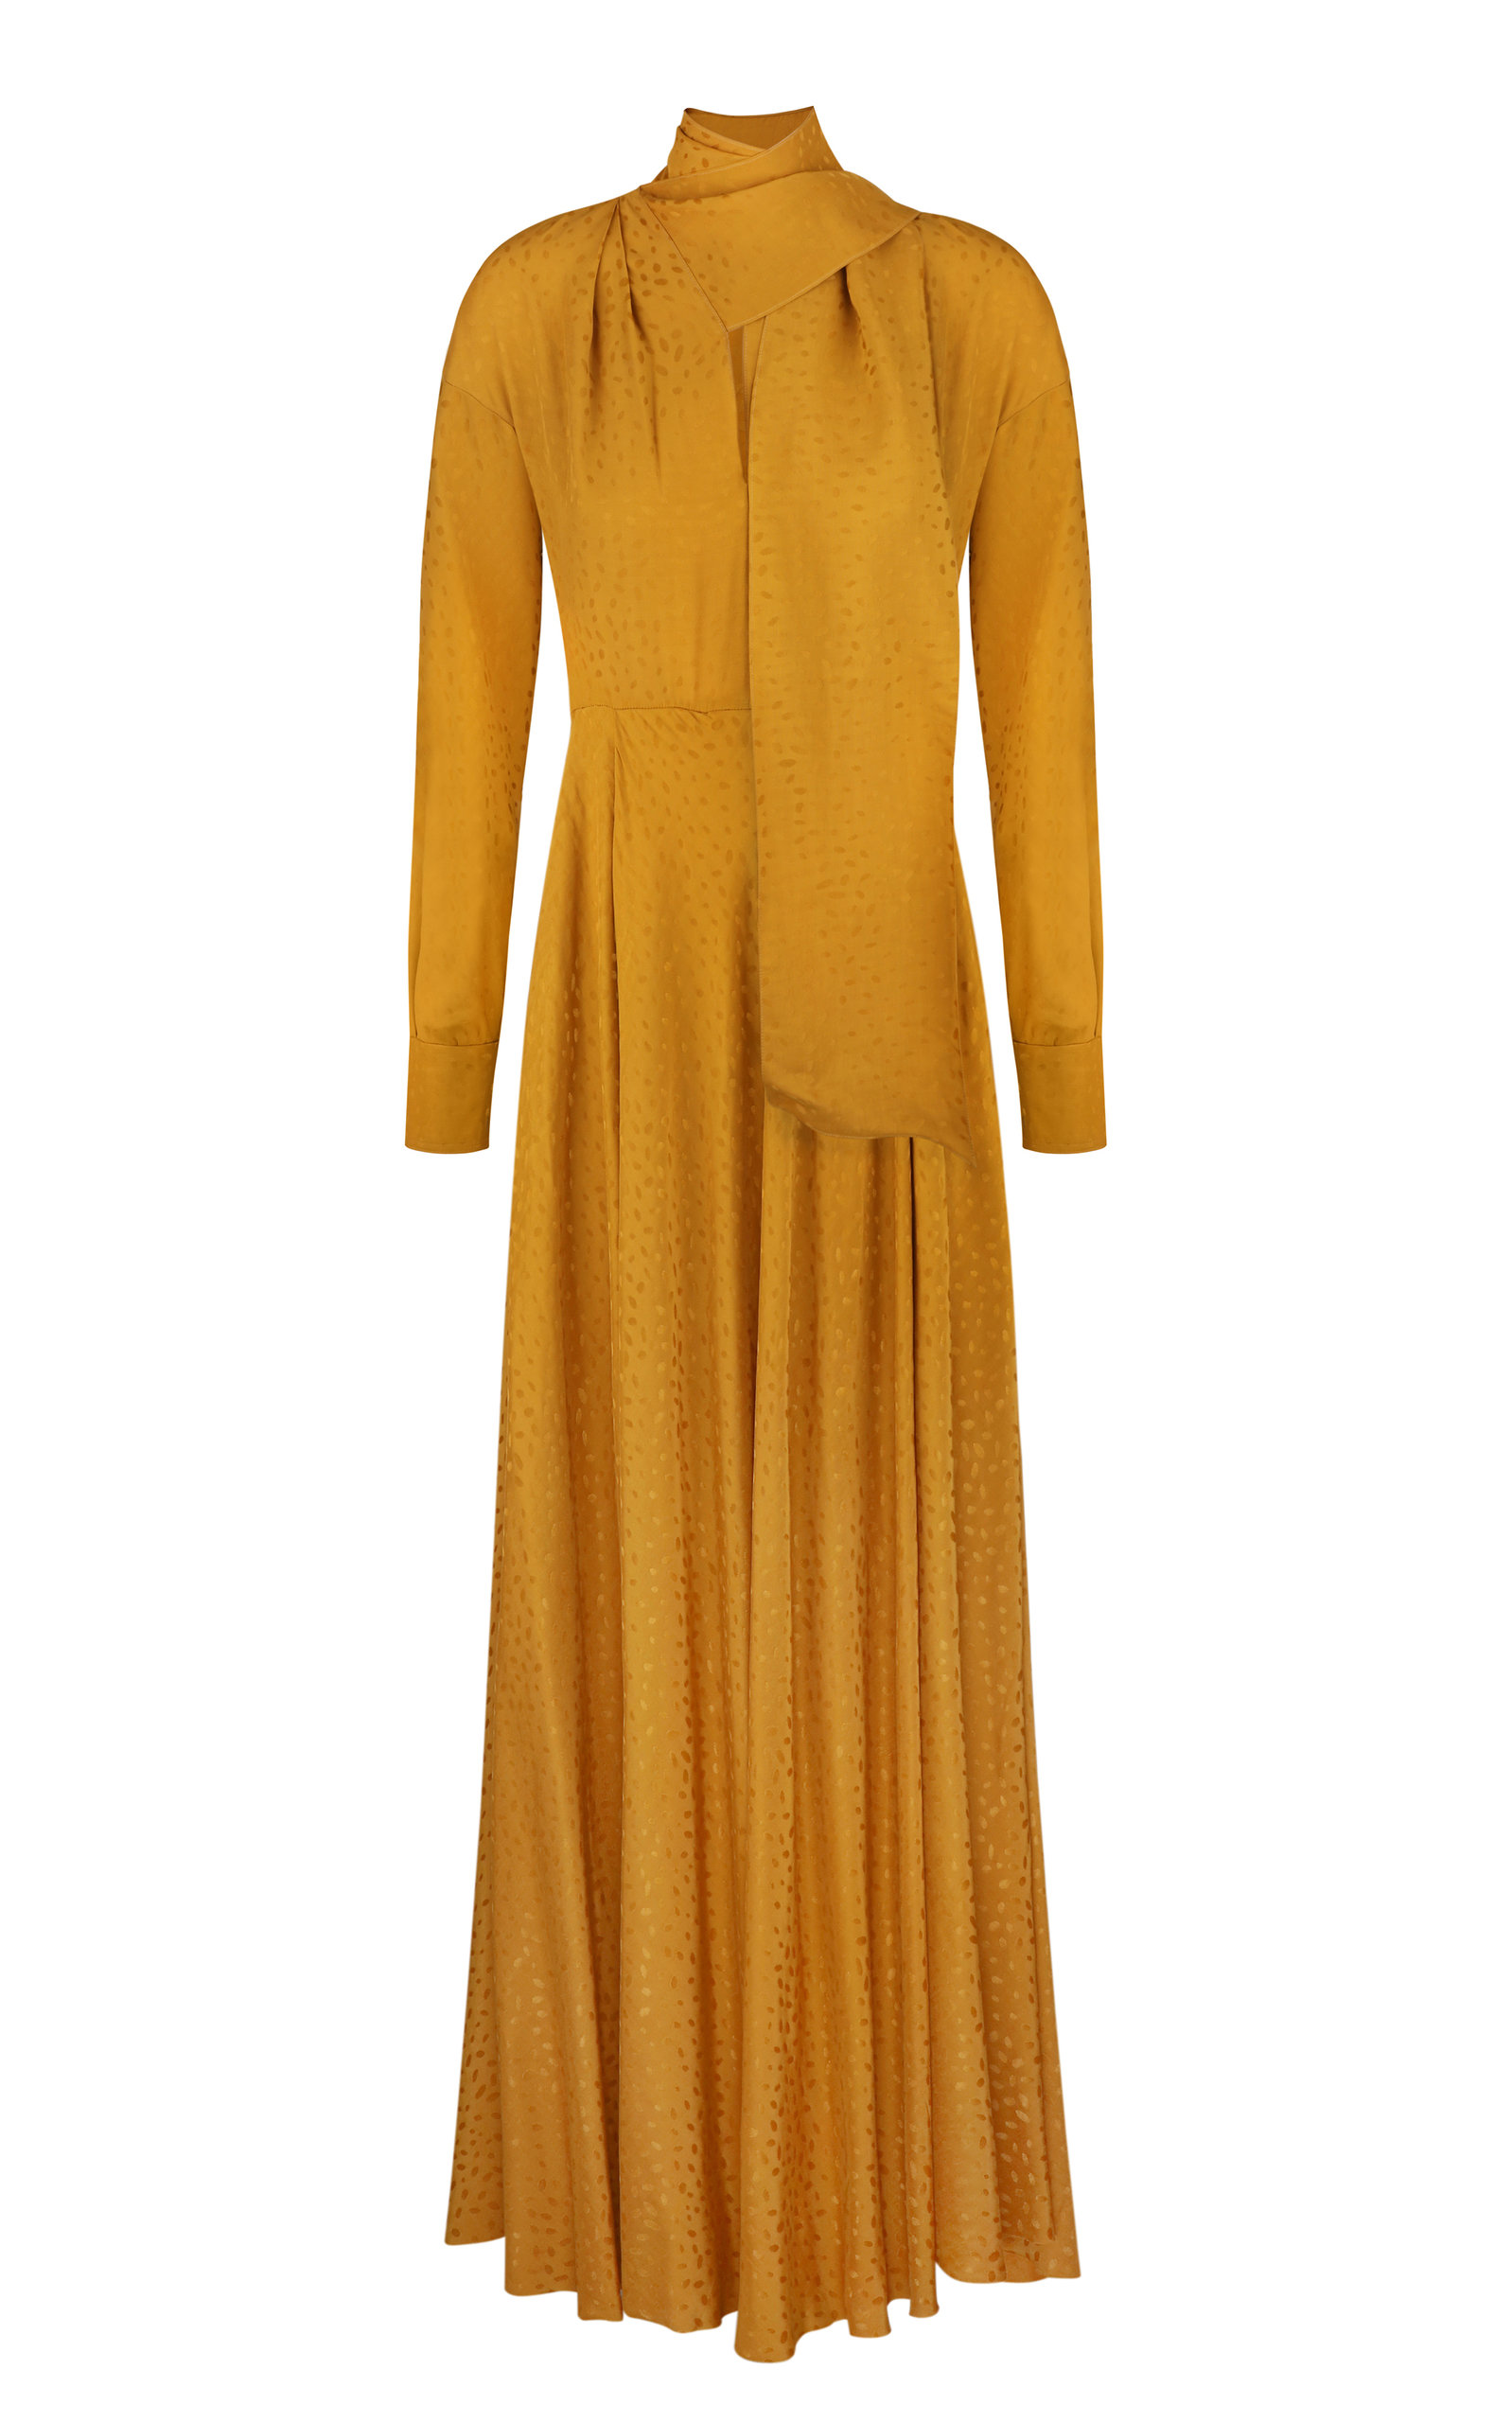 ANNA OCTOBER WOMEN'S LONDON TEXTURED SATIN MAXI DRESS